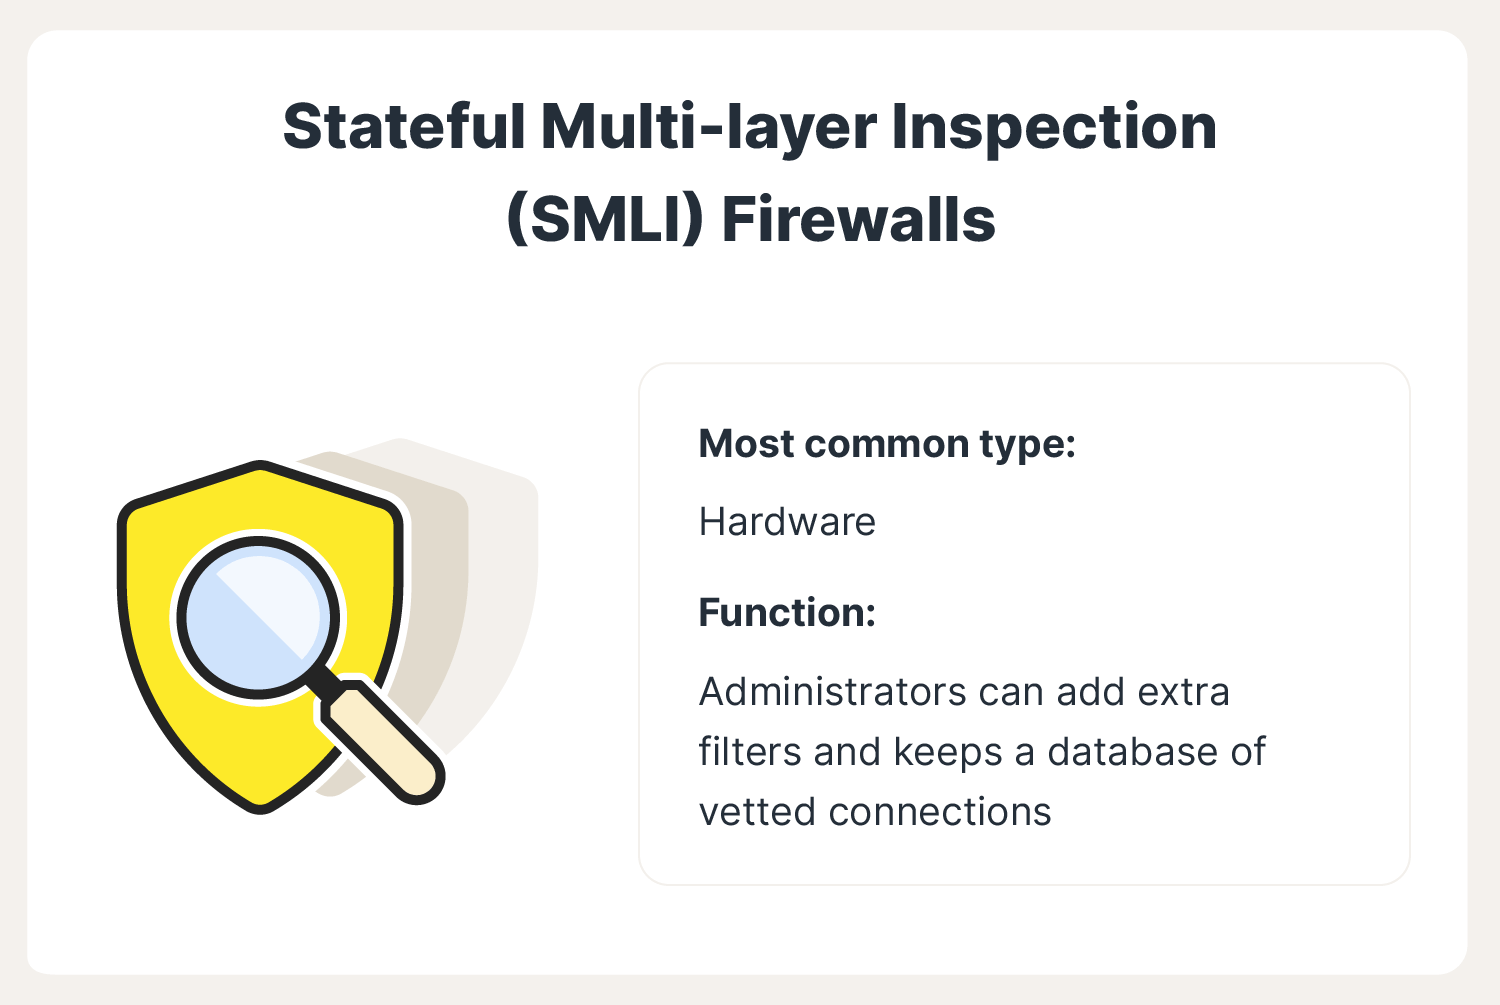 An image describes stateful multi-layer inspection firewalls, a popular type of firewall.